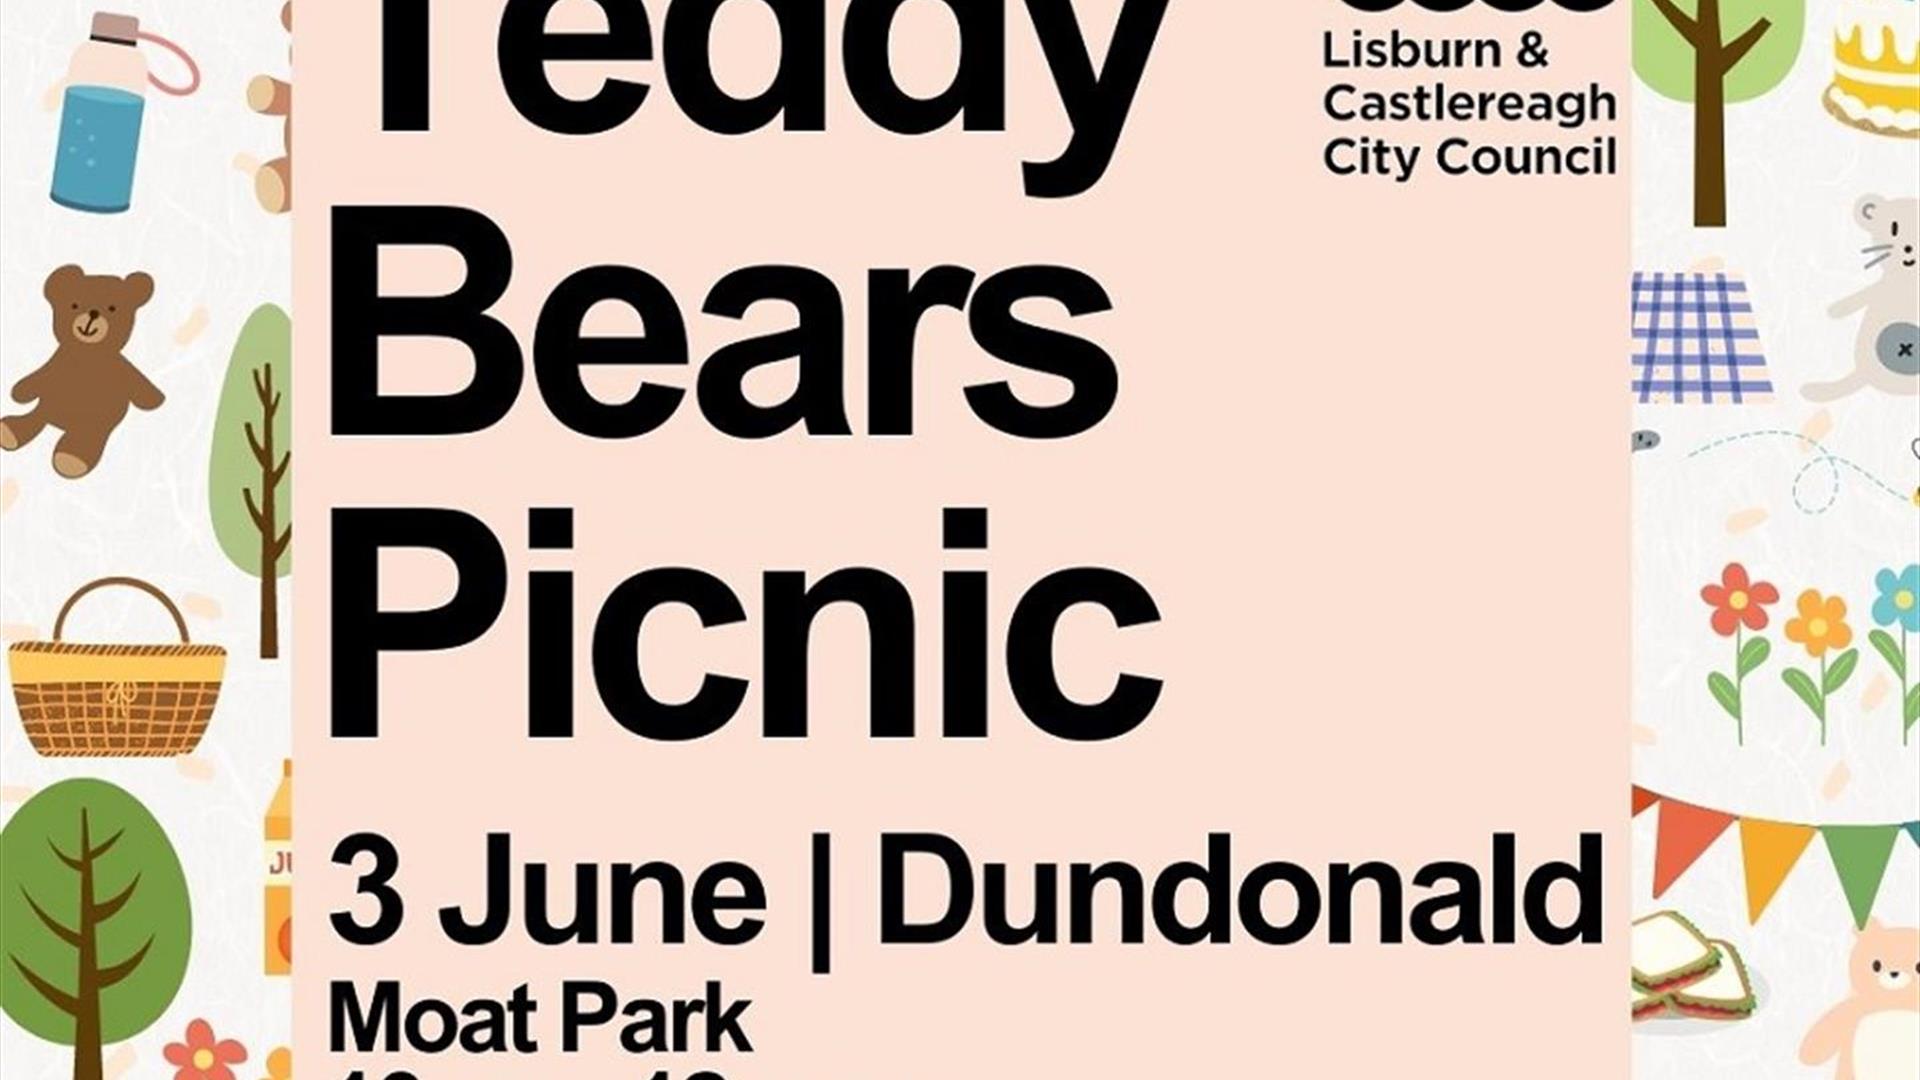 Poster for Teddy Bears Picnic